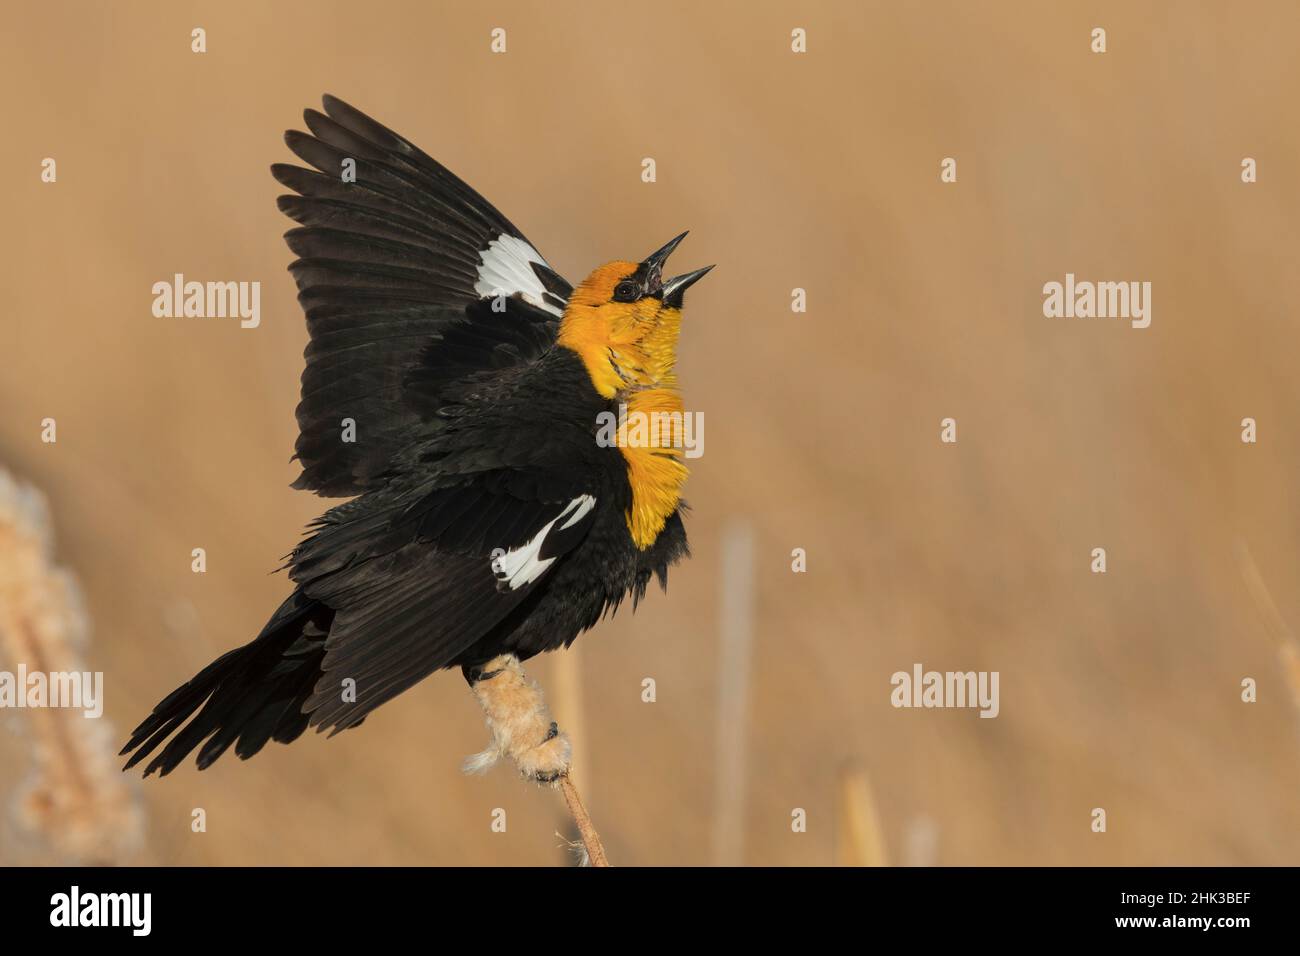 Pájaro negro de cabeza amarilla, exposición matutina y canción Foto de stock